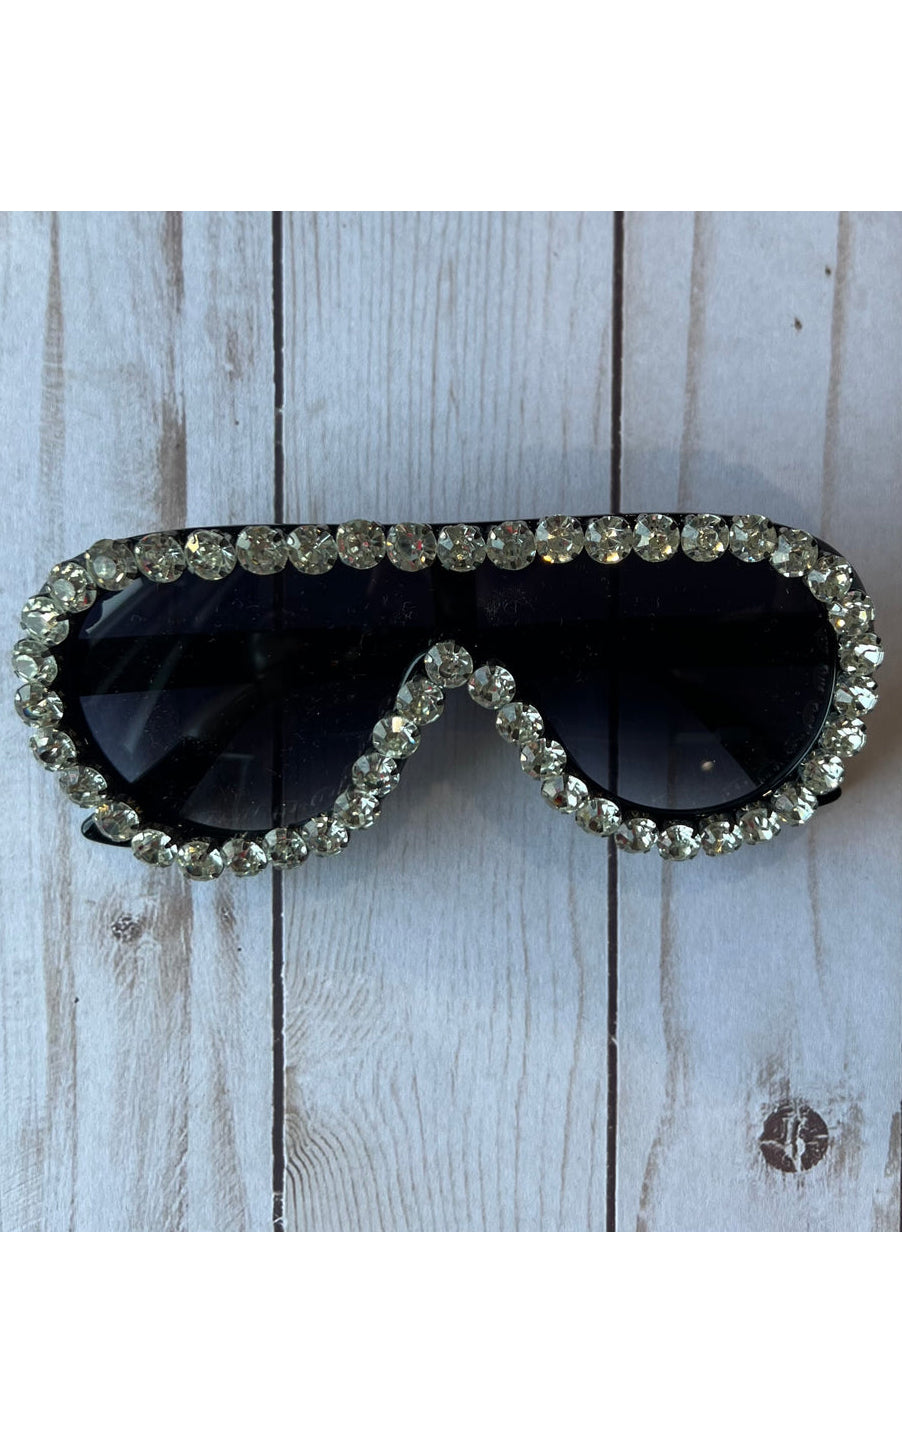 Sunglasses: Rhinestone Teardrop Aviators